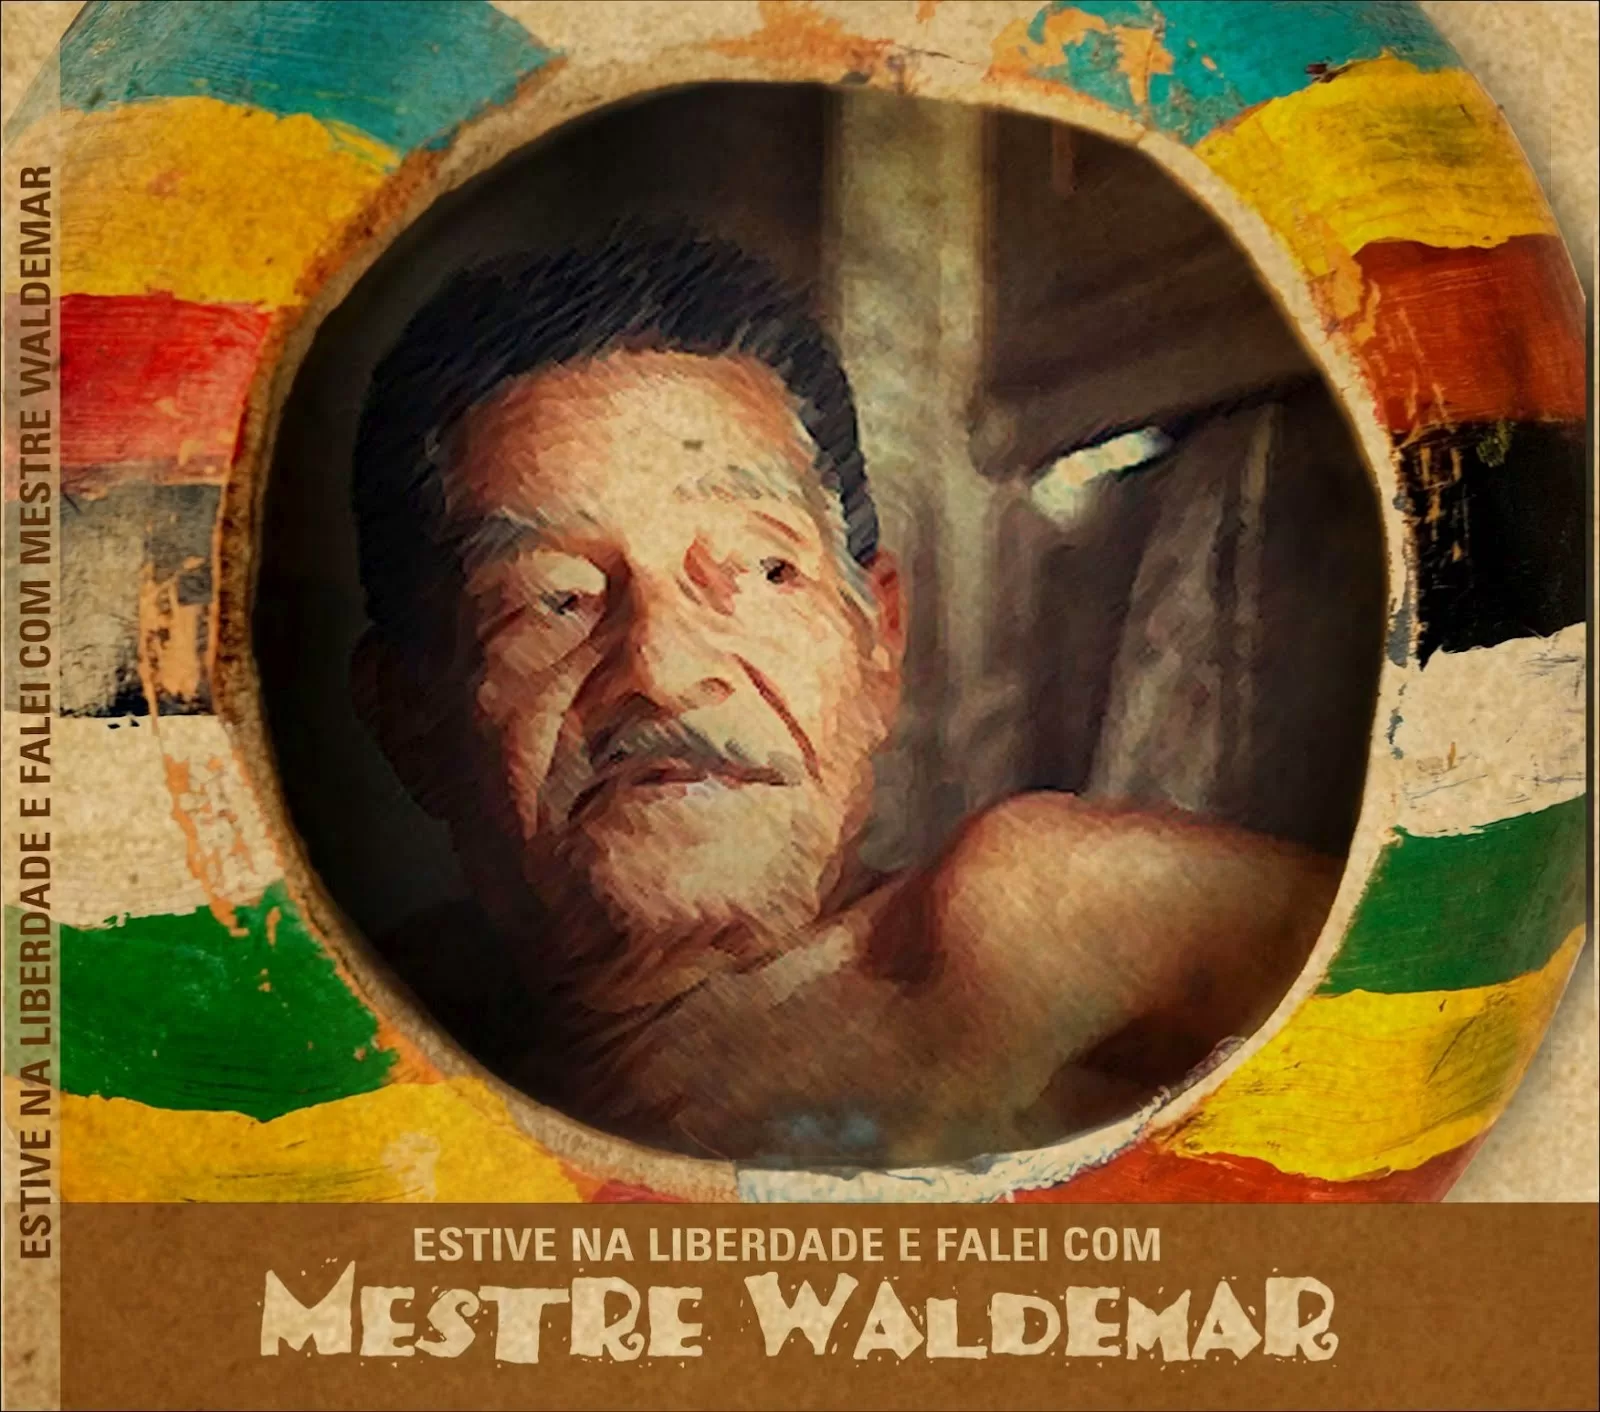 Mestre Waldemar